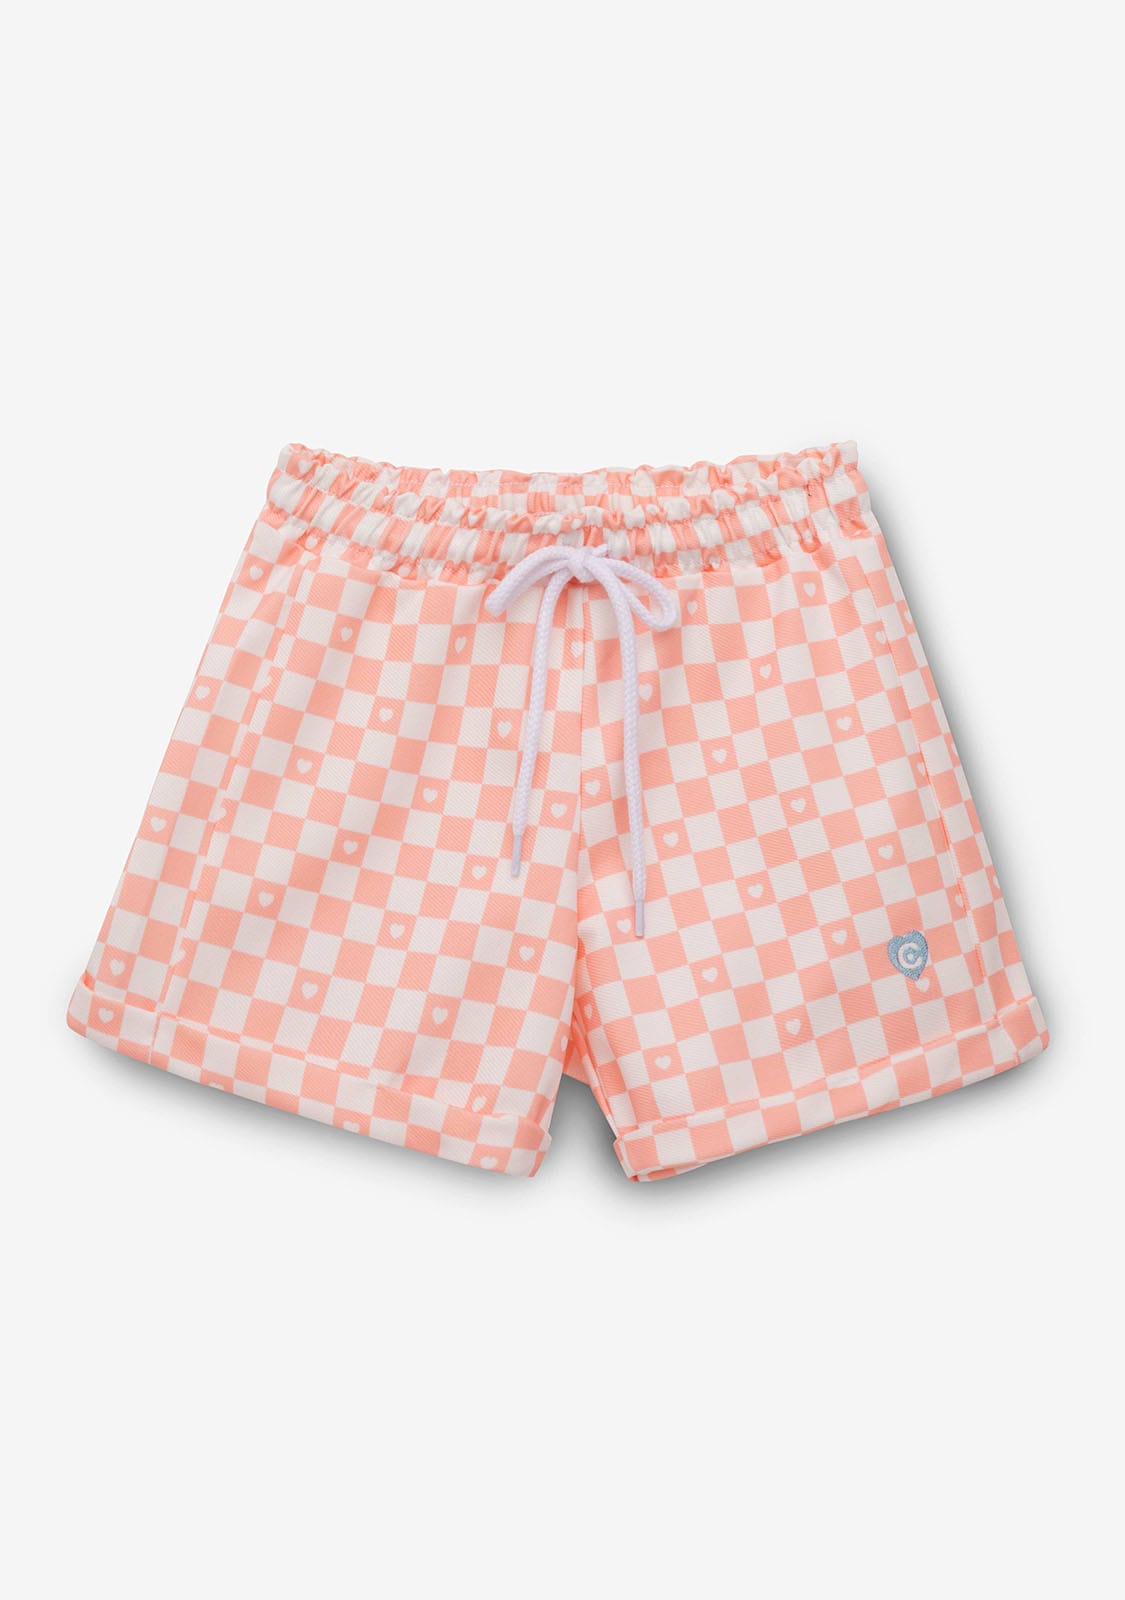 CONGUITOS TEXTIL Clothing Girl´s Orange Checkerboard Shorts